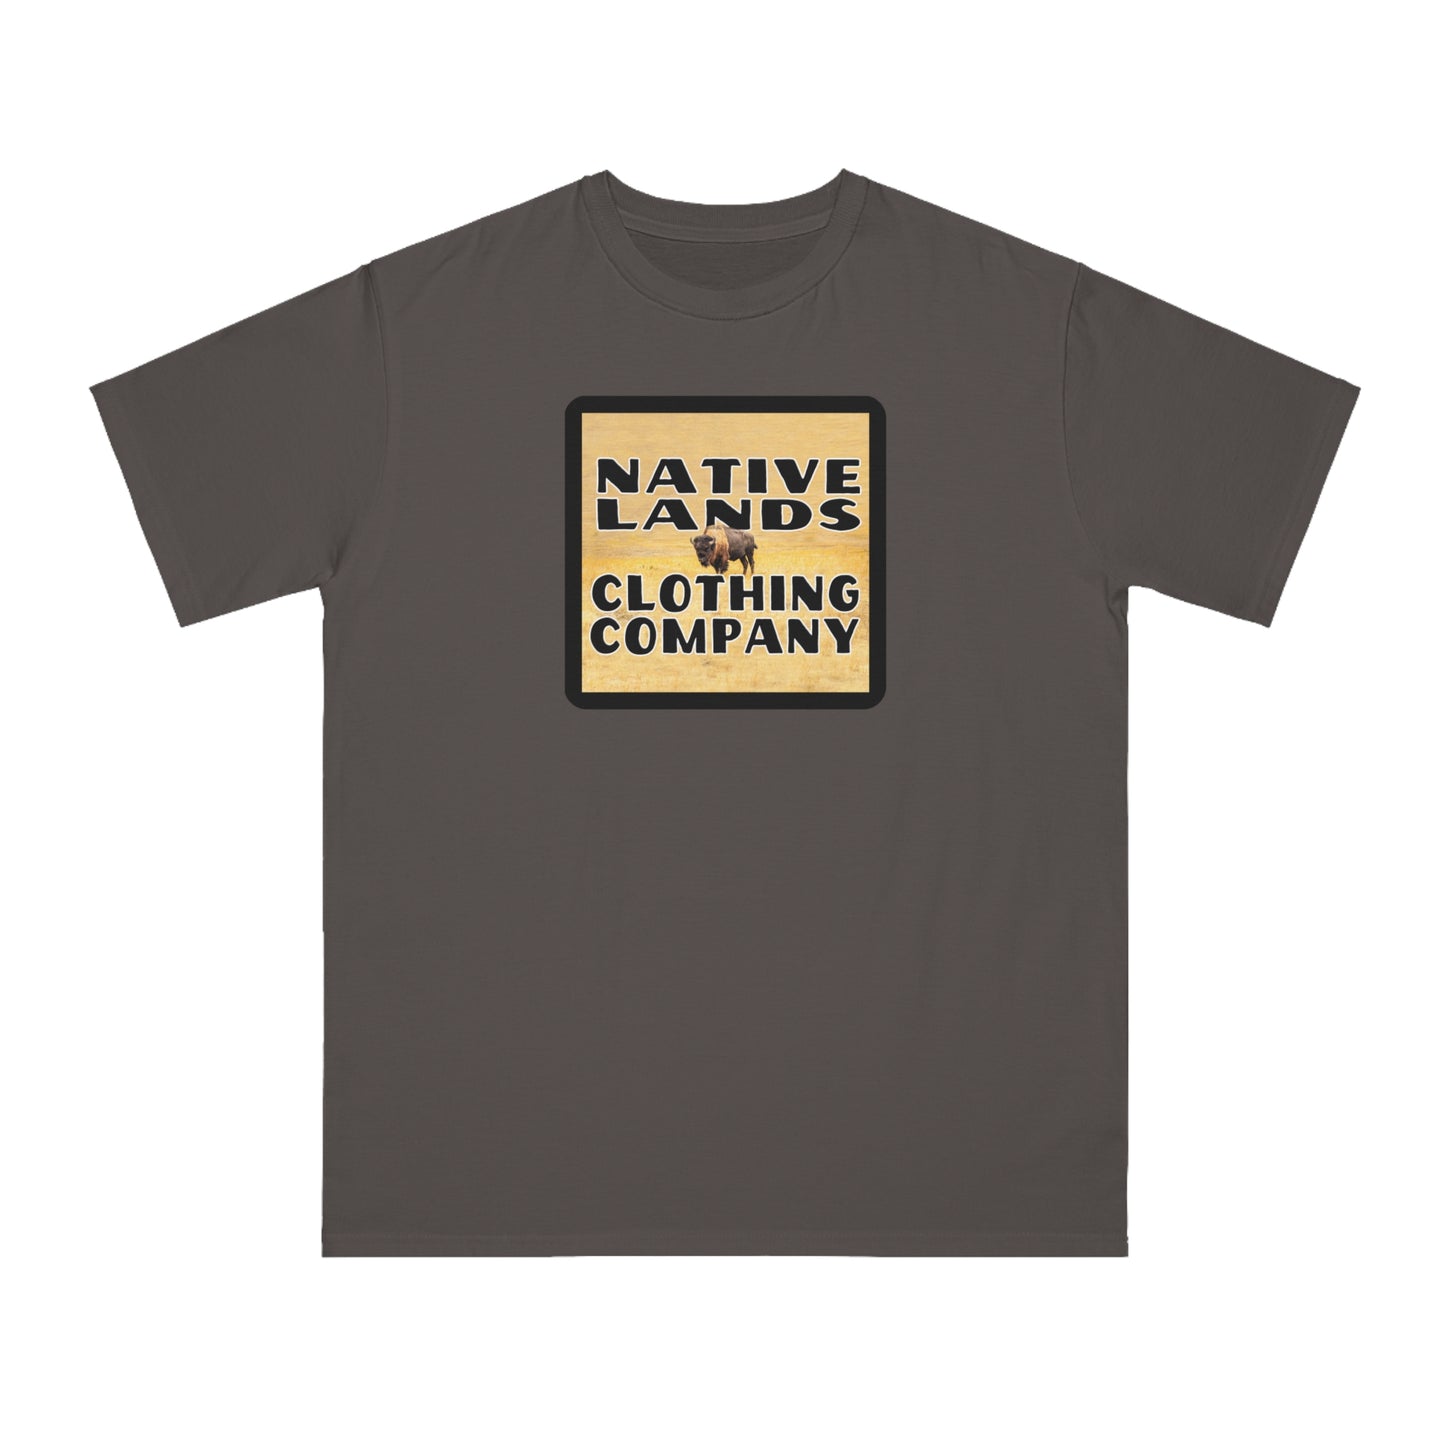 Organic Bison Prairie Shirt Cotton Native American